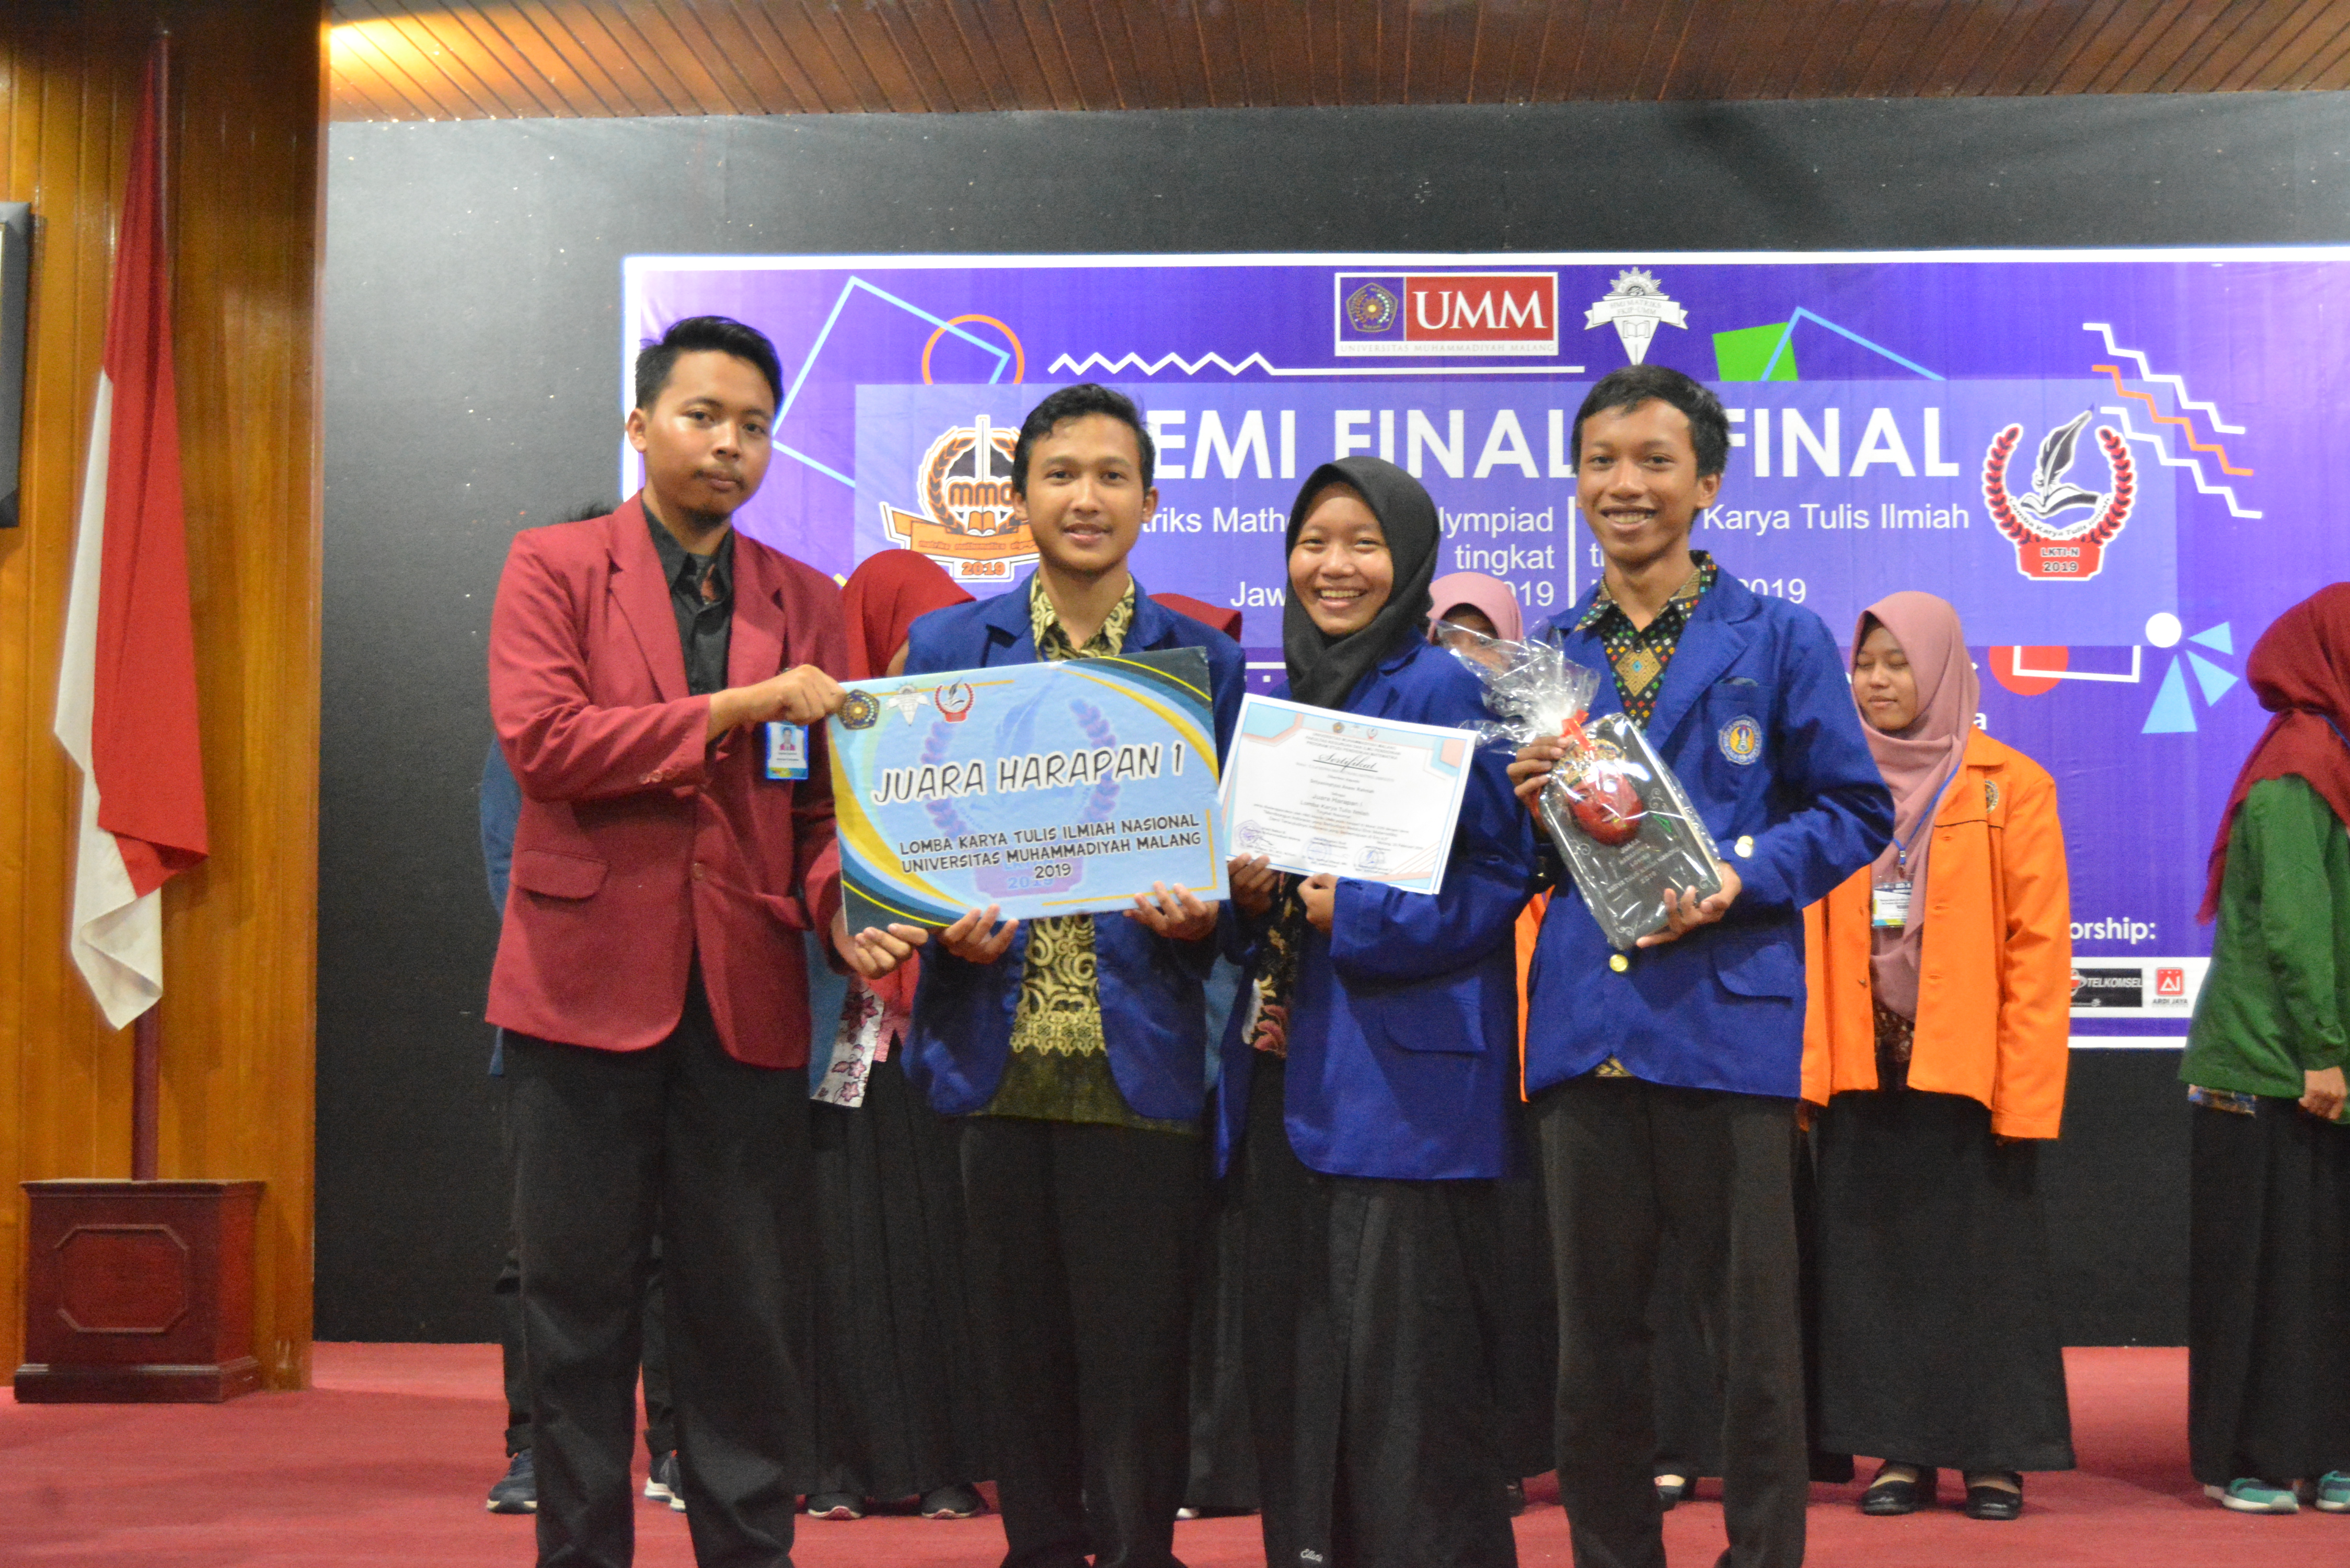 Foto Lomba Karya Tulis Ilmiah Nasional HMJ Matriks Universitas Muhammadiyah Malang Tahun 2019